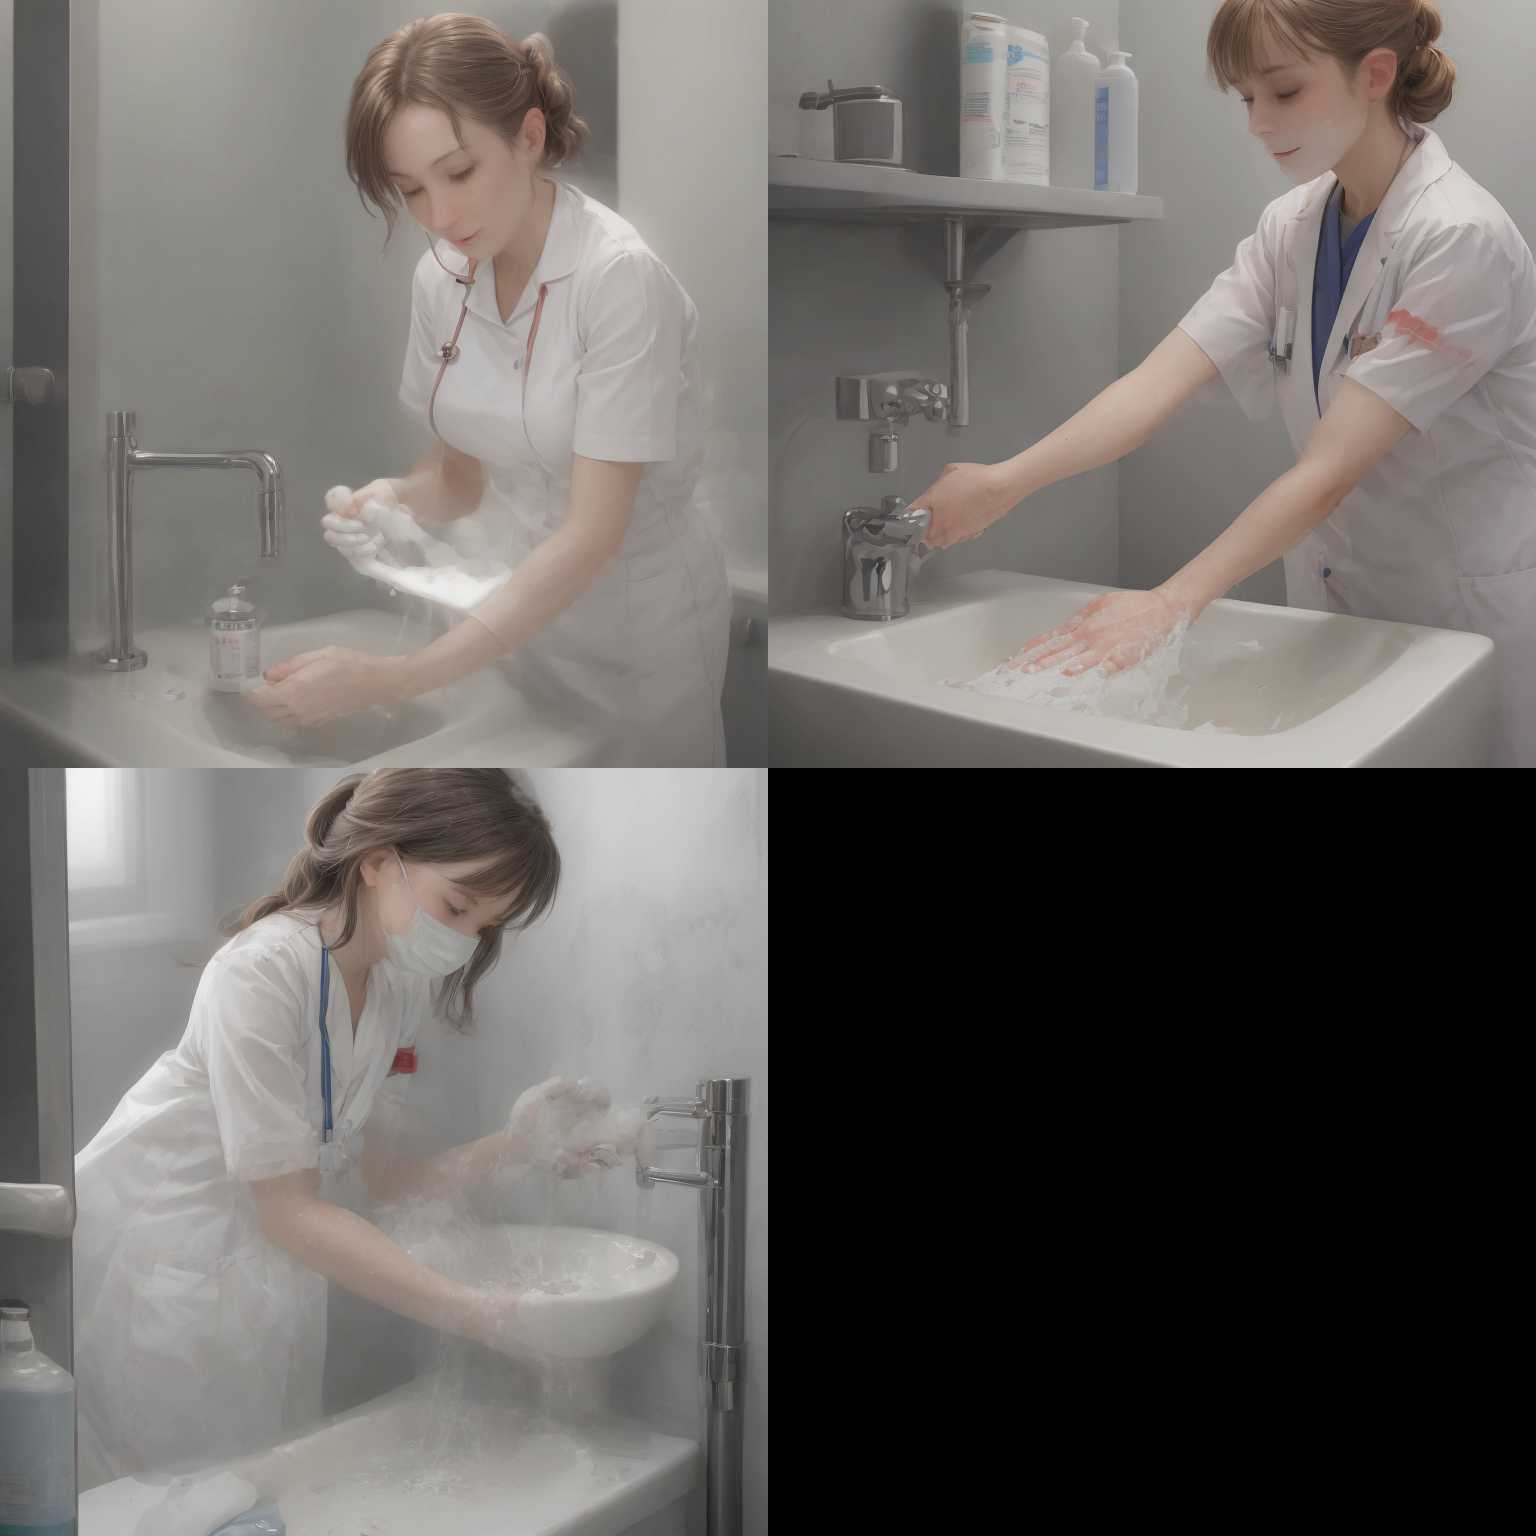 A nurse washing hands